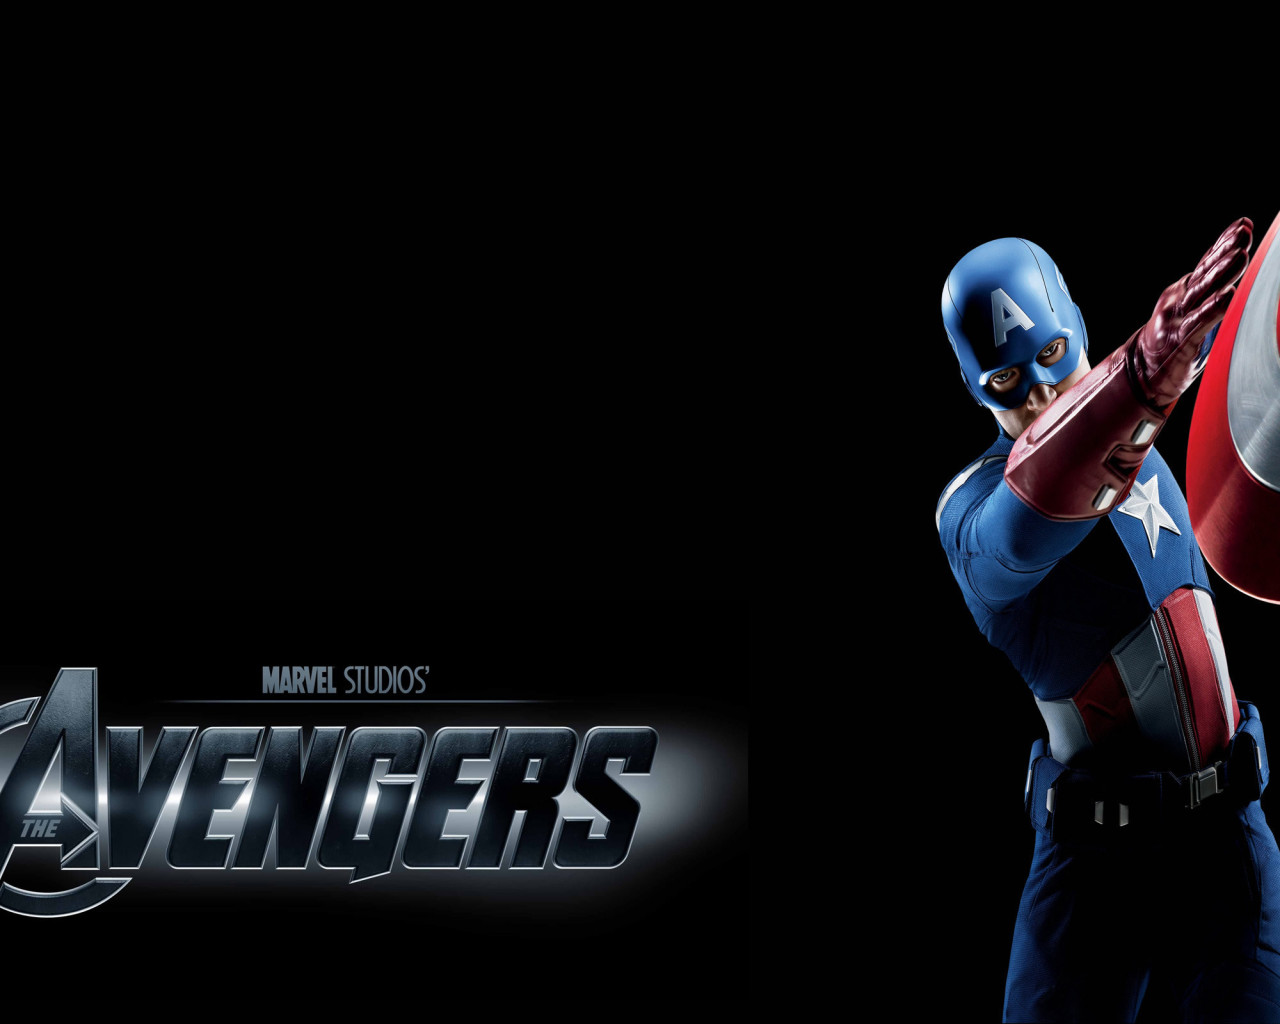 Capitan America - The Avengers